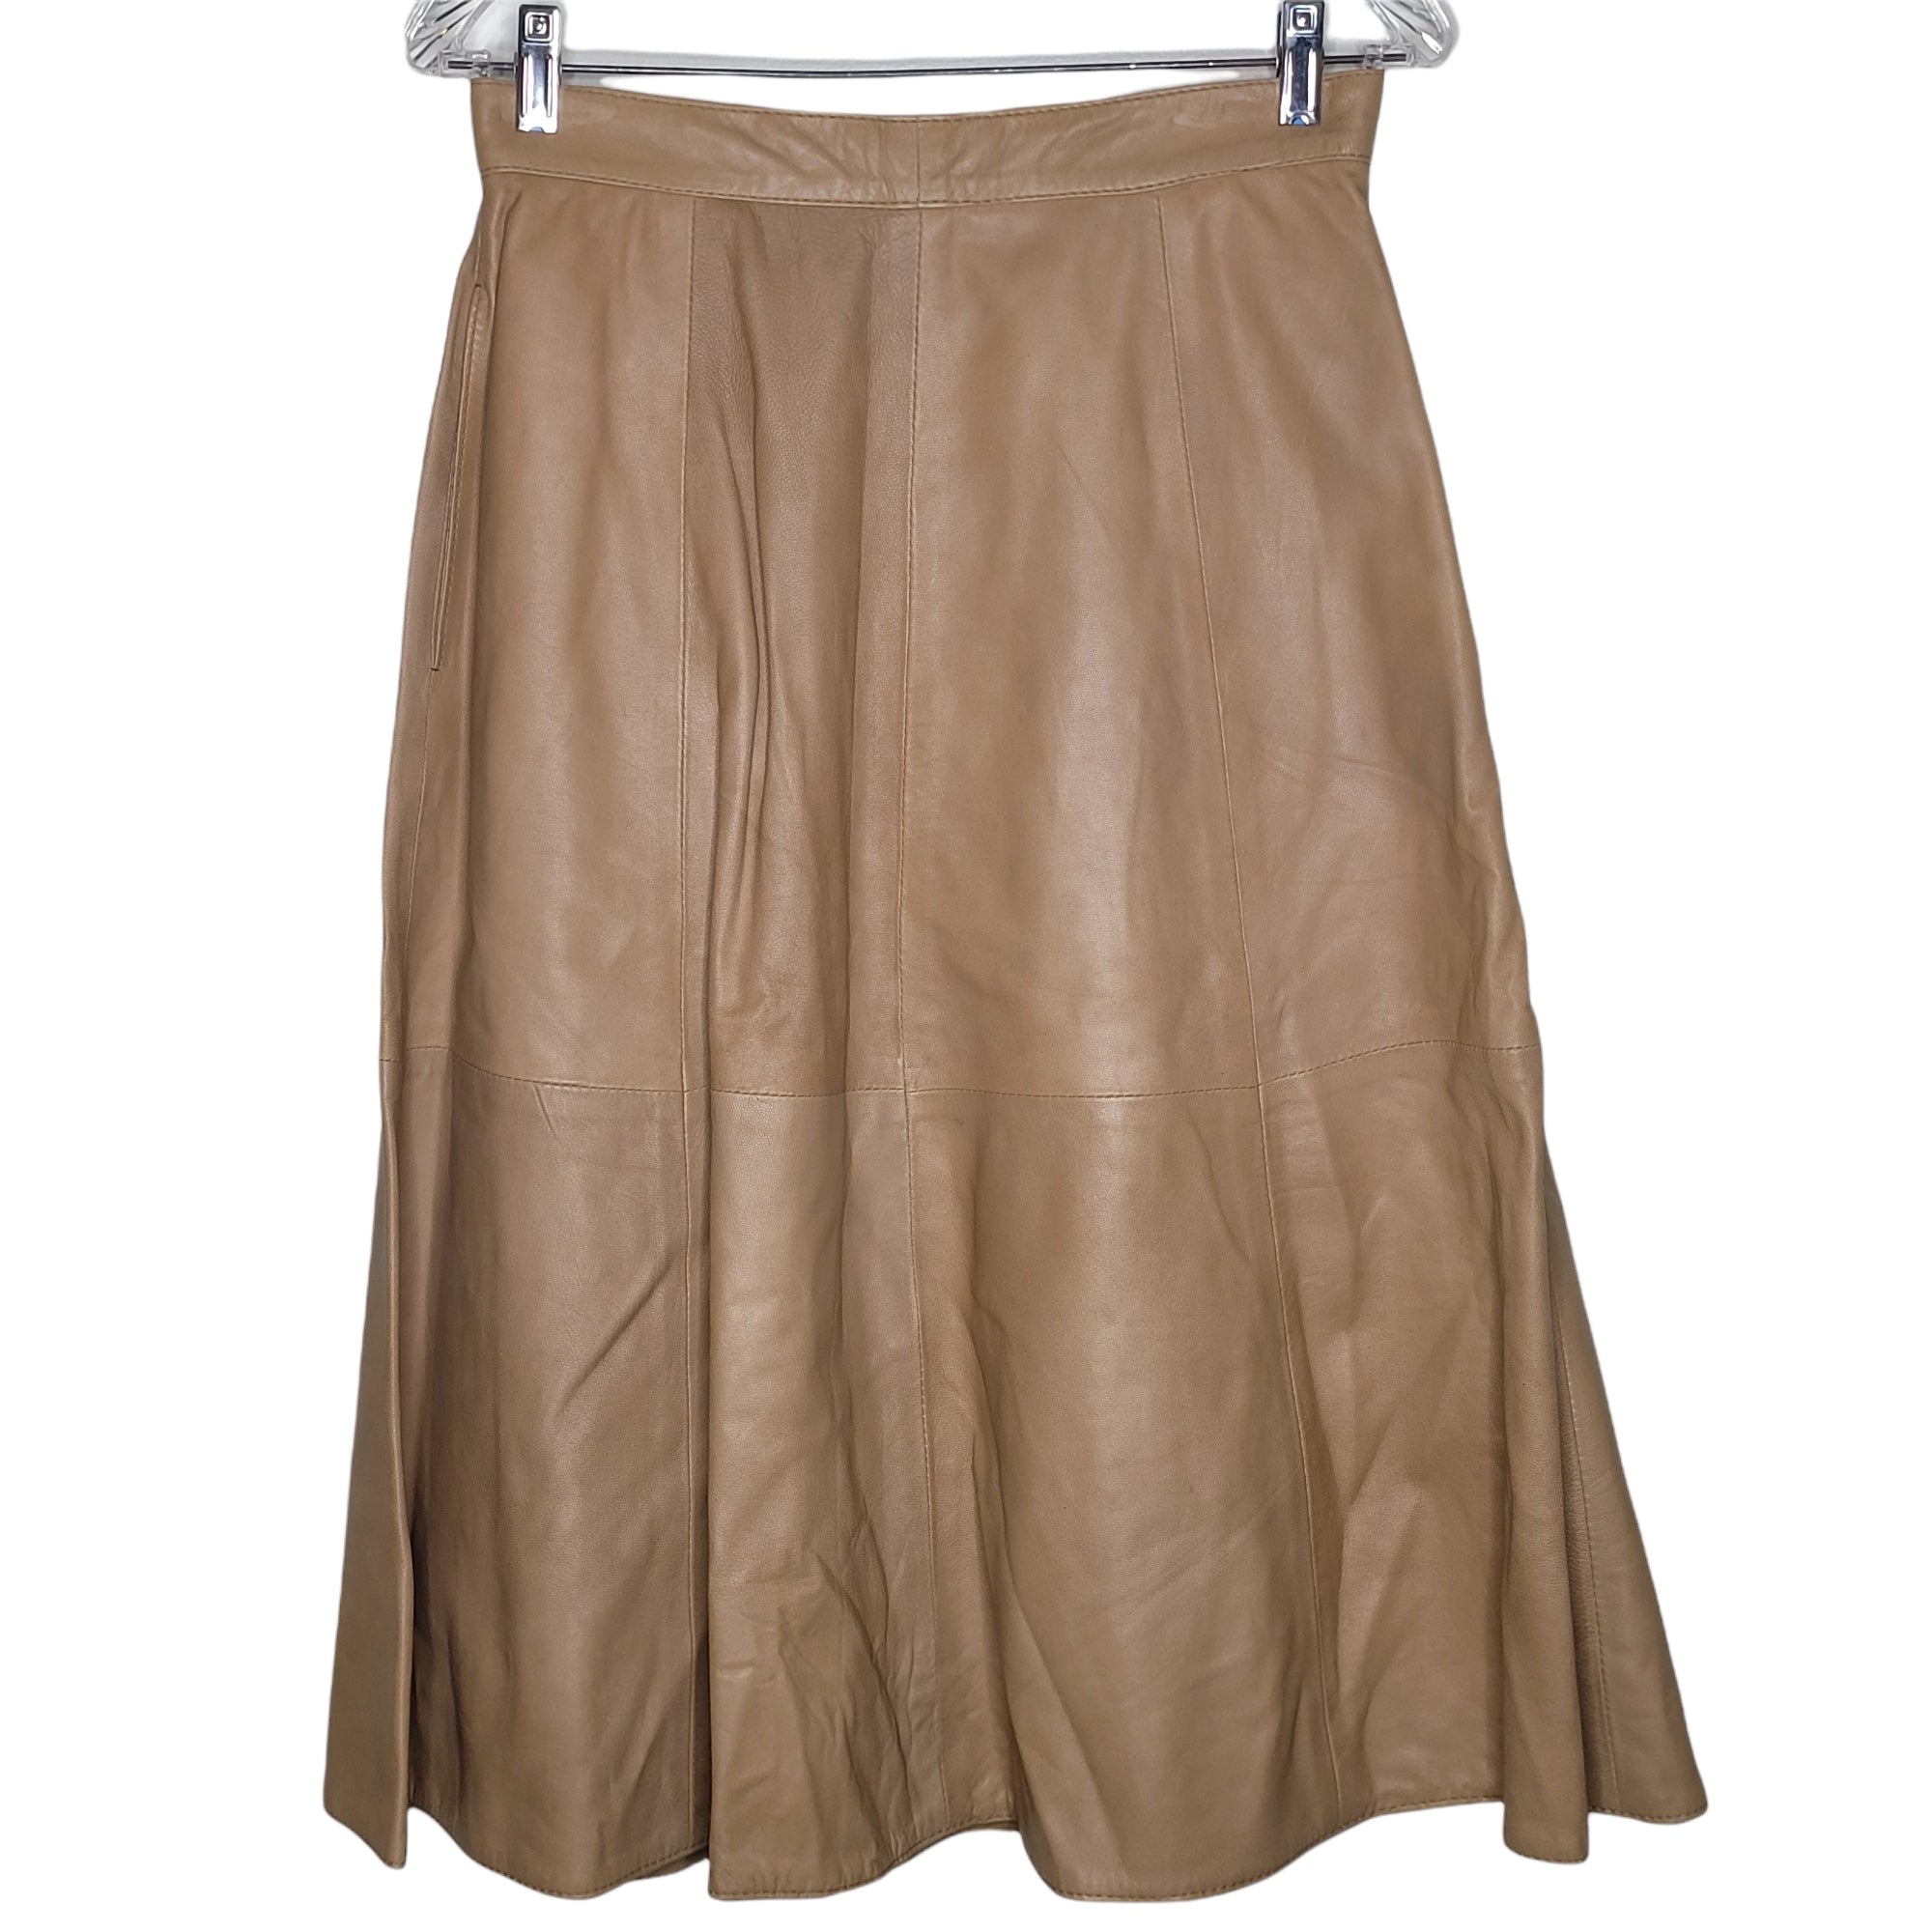 Vera Pelle Vintage Brown Tan Leather Skirt Pockets Zip Up Button Back Size 46 EU